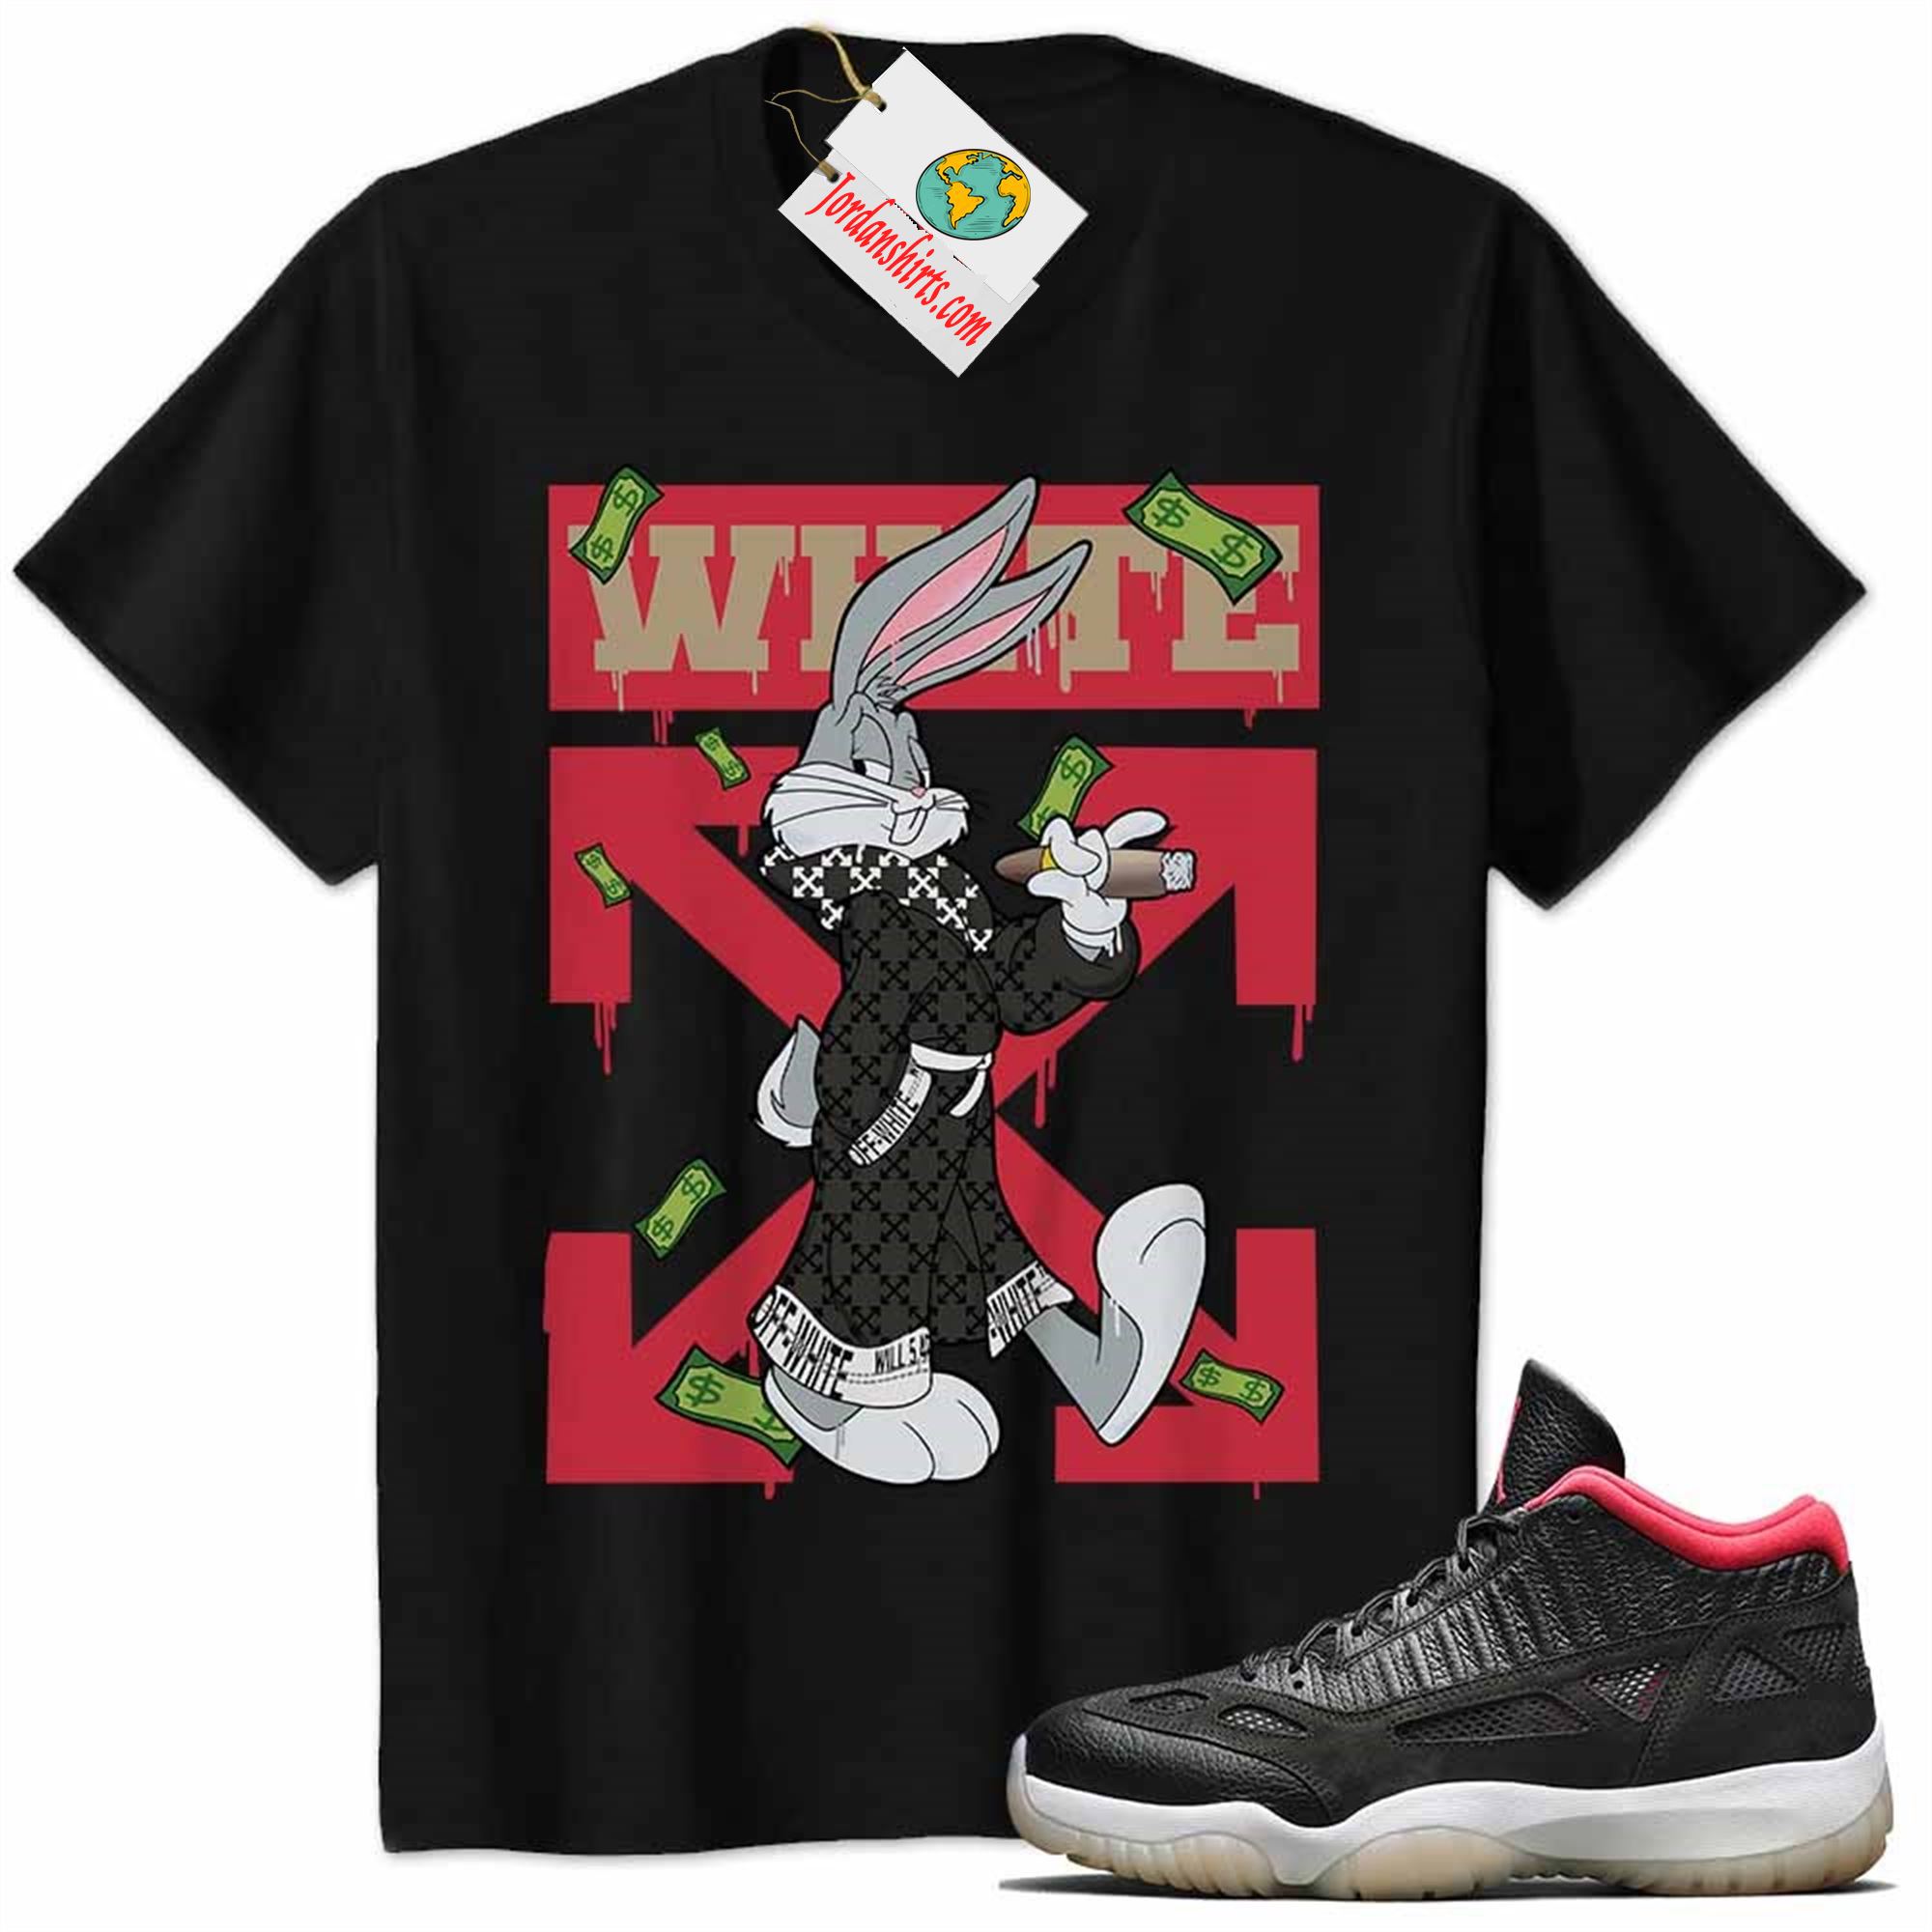 Jordan 11 Shirt, Jordan 11 Bred Shirt Bug Bunny Smokes Weed Money Falling Black Plus Size Up To 5xl